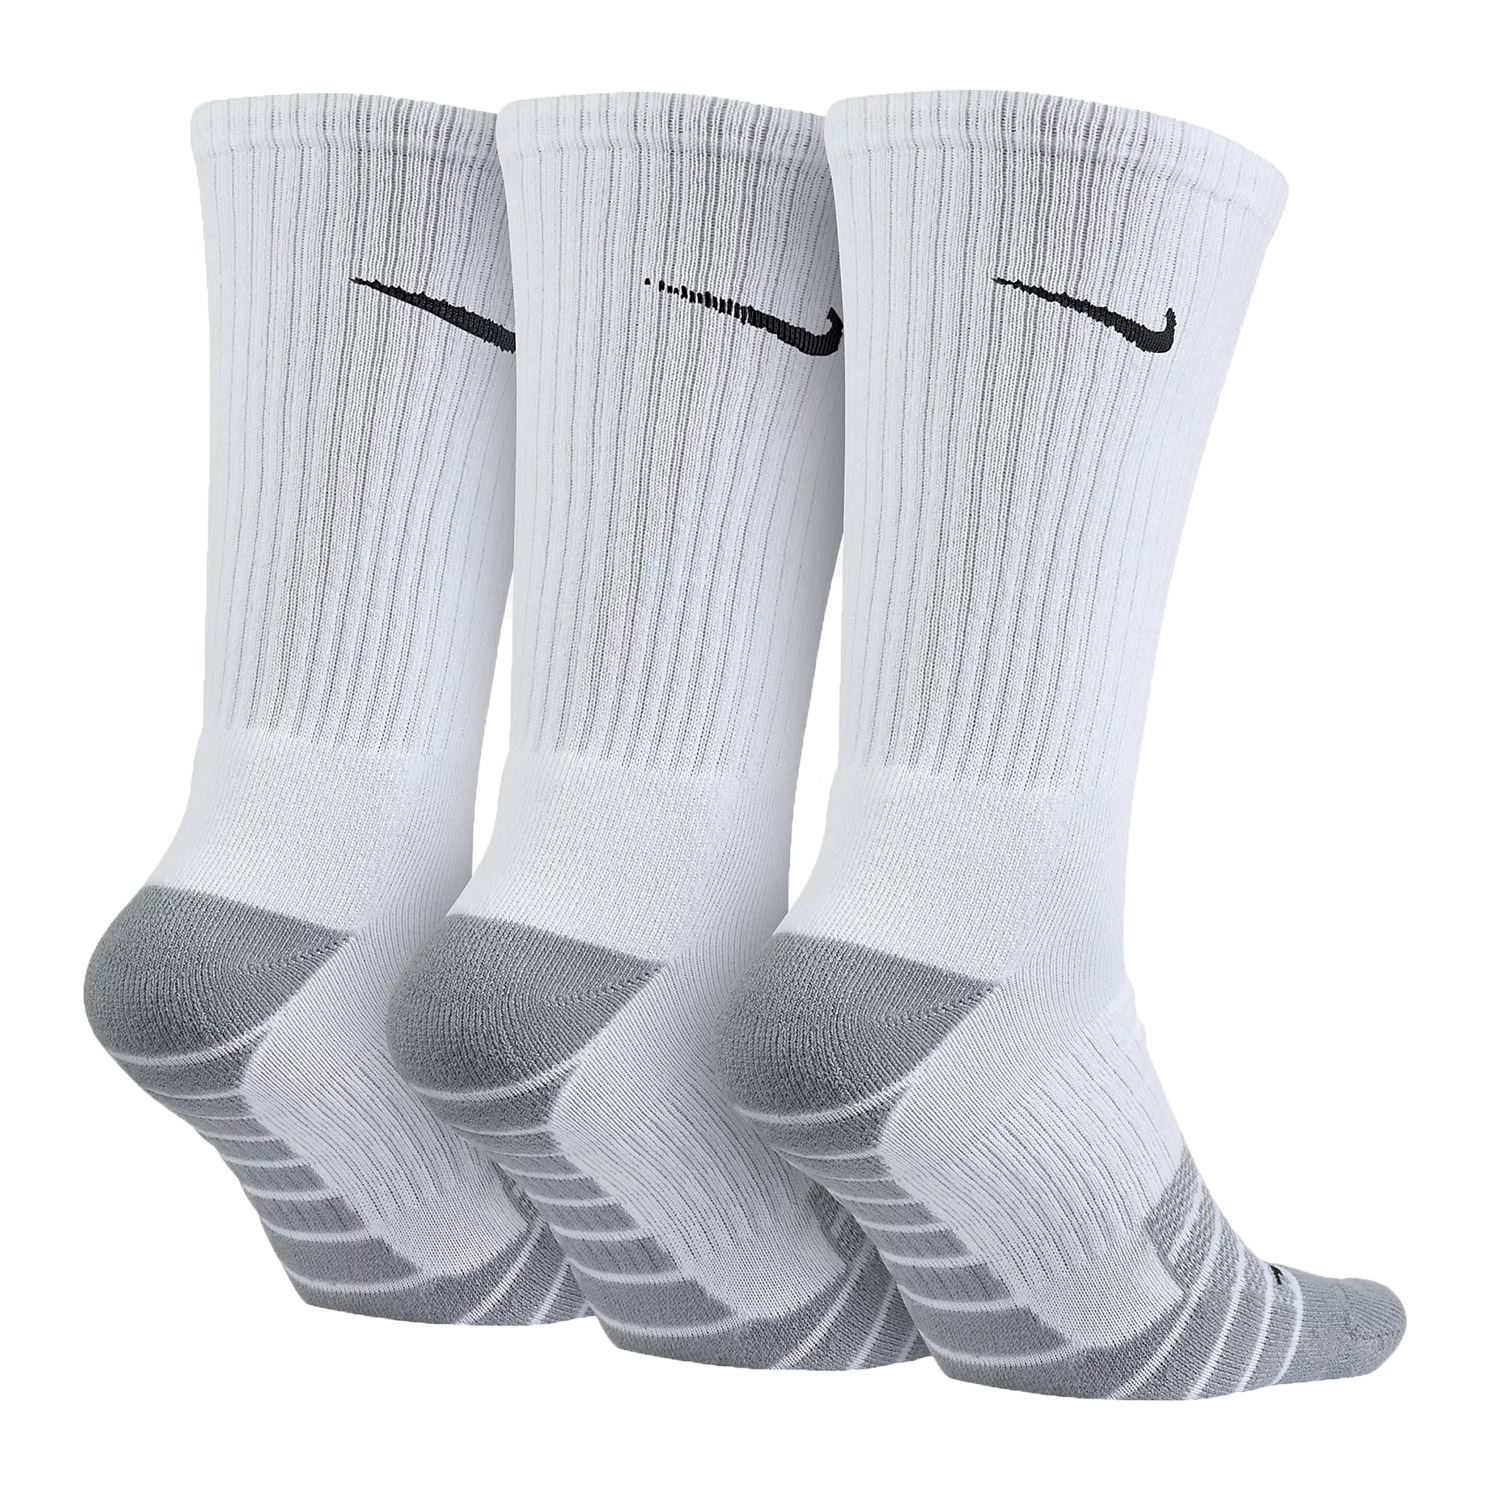 Nike Dry Cushion Crew x 3 Tennis Socks - White/Grey